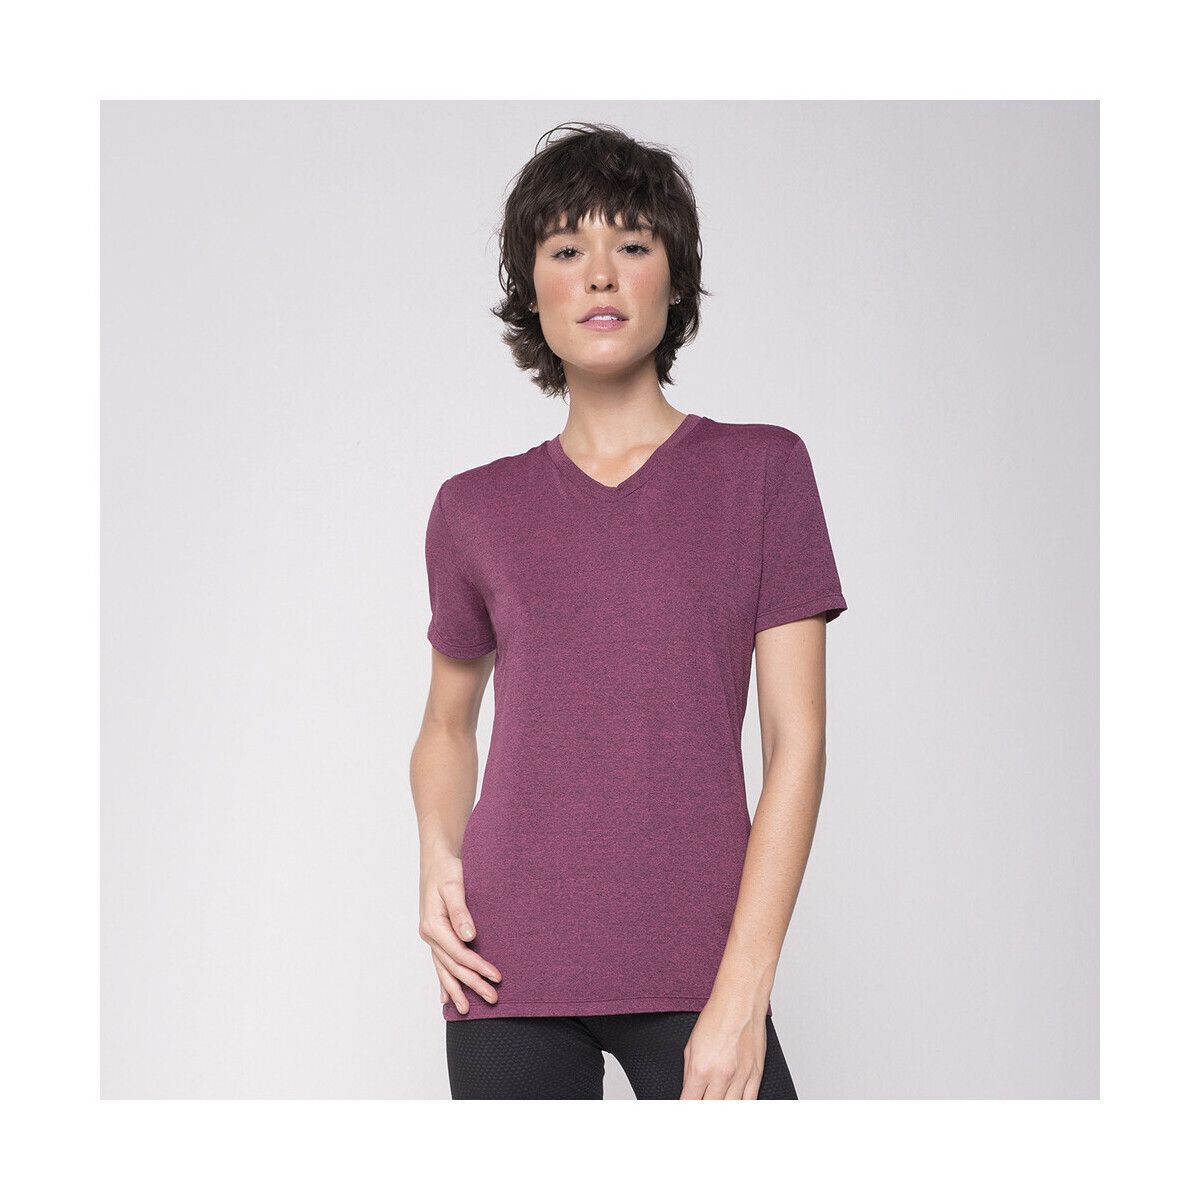 Vêtements Femme Long-sleeved cashmere polo shirt Classics  UPF 50+ Rose